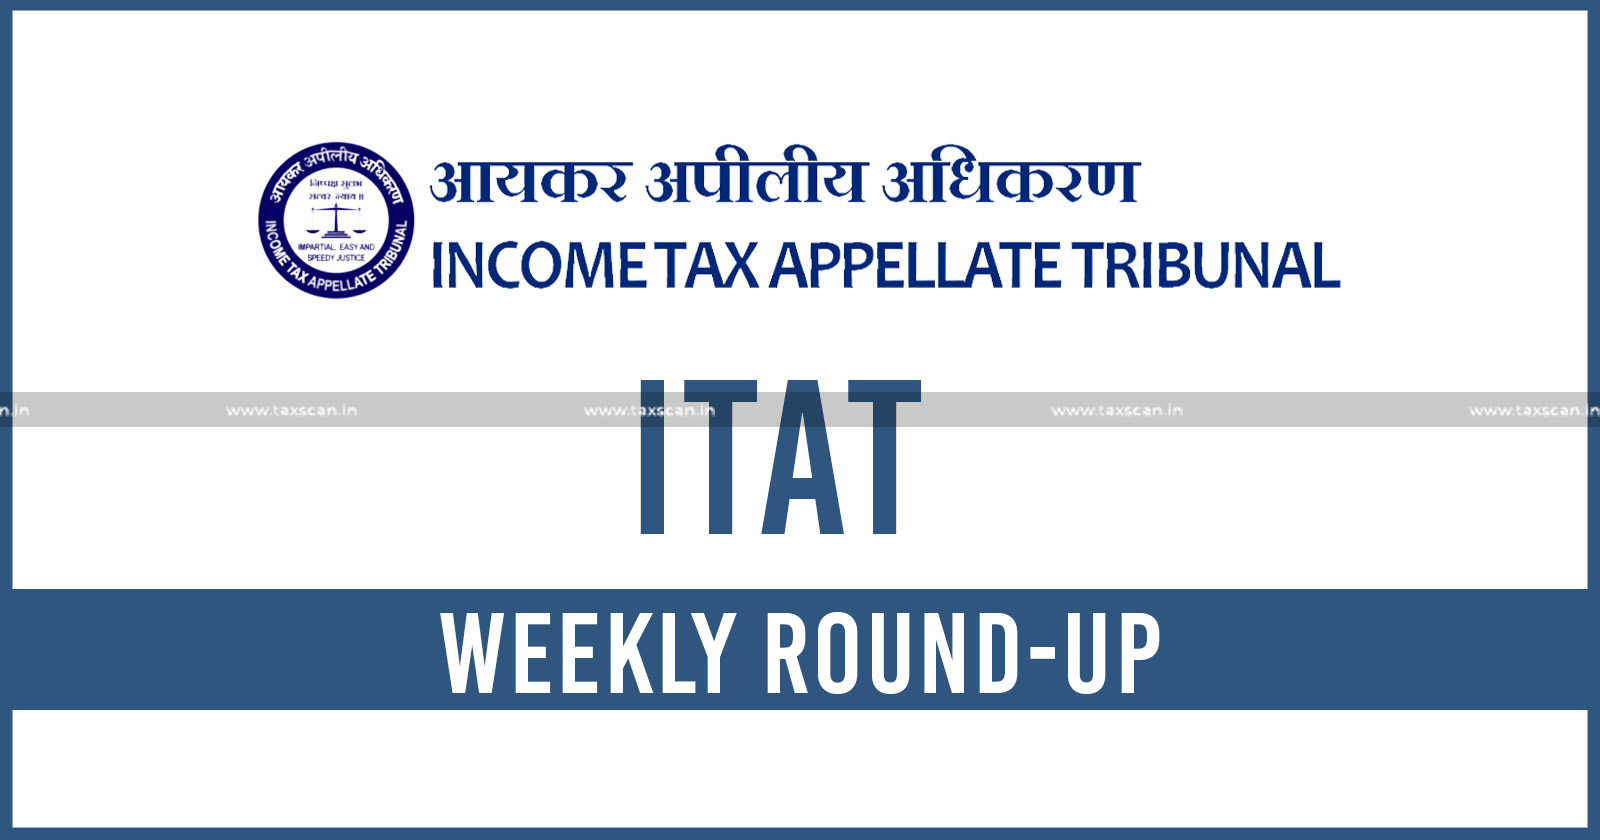 ITAT - Weekly Round-Up - Round-Up - Taxscan